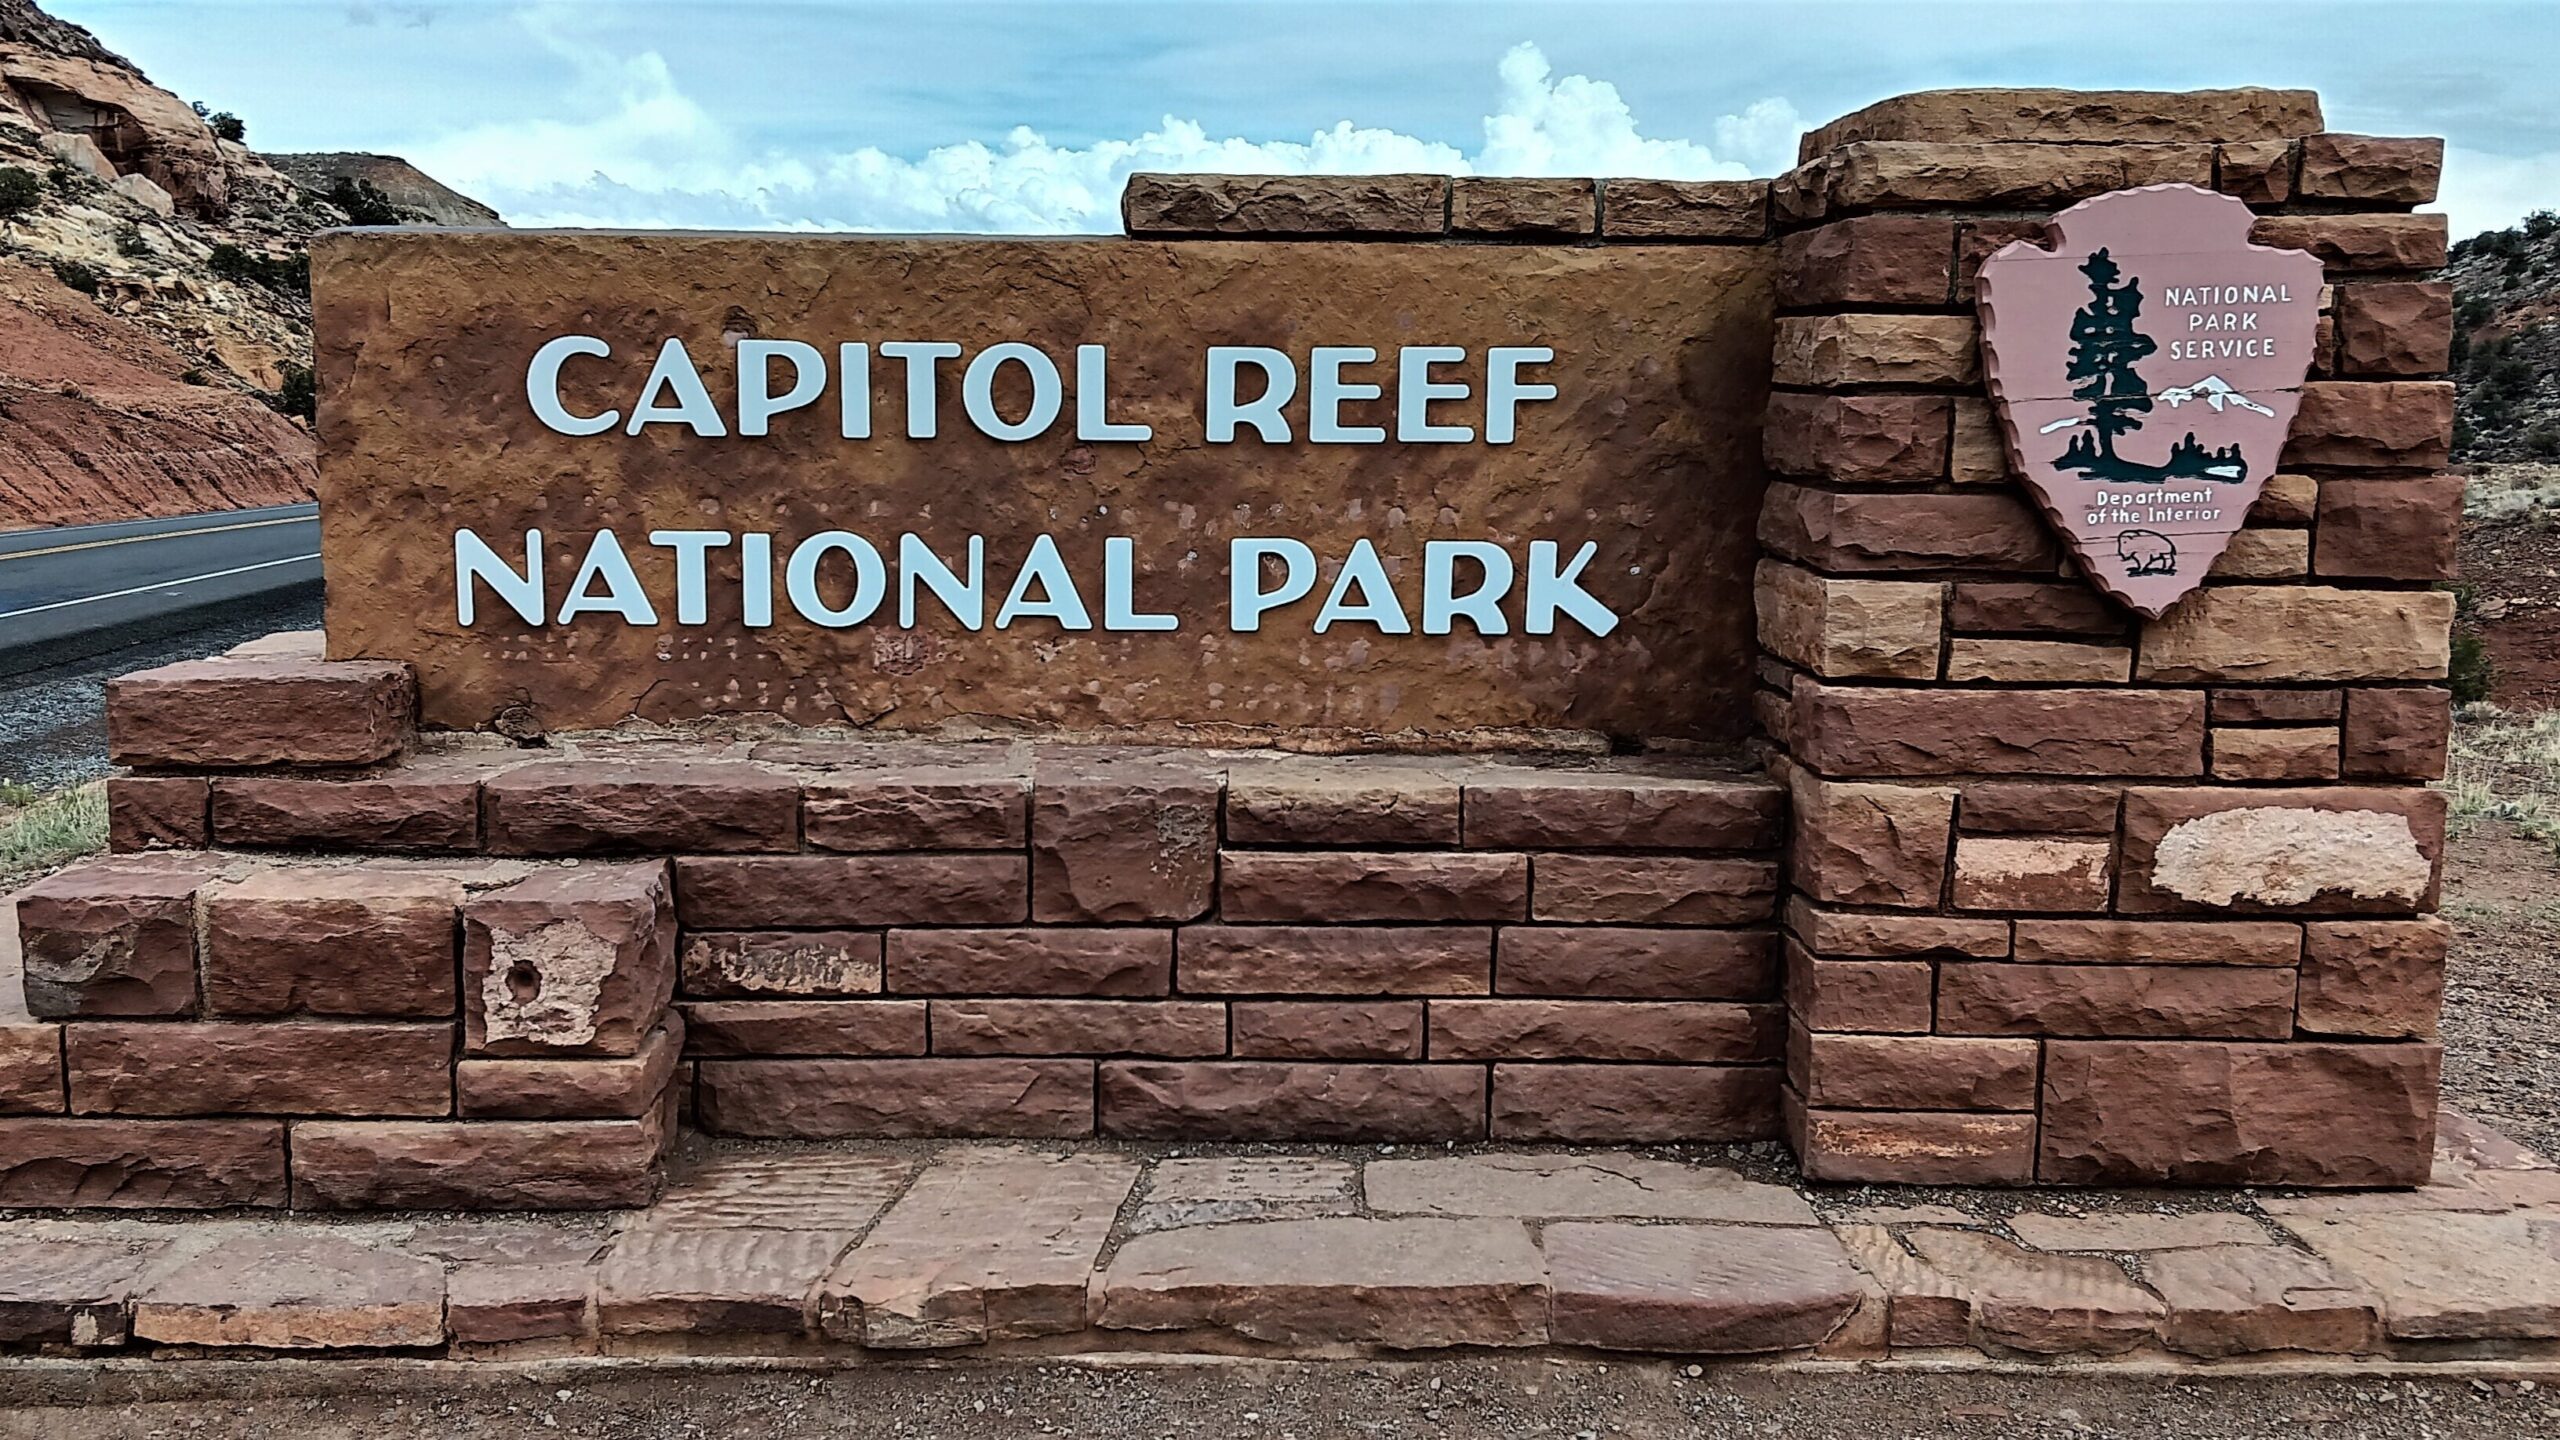 Entrance Sign for Capitol Reef National Park